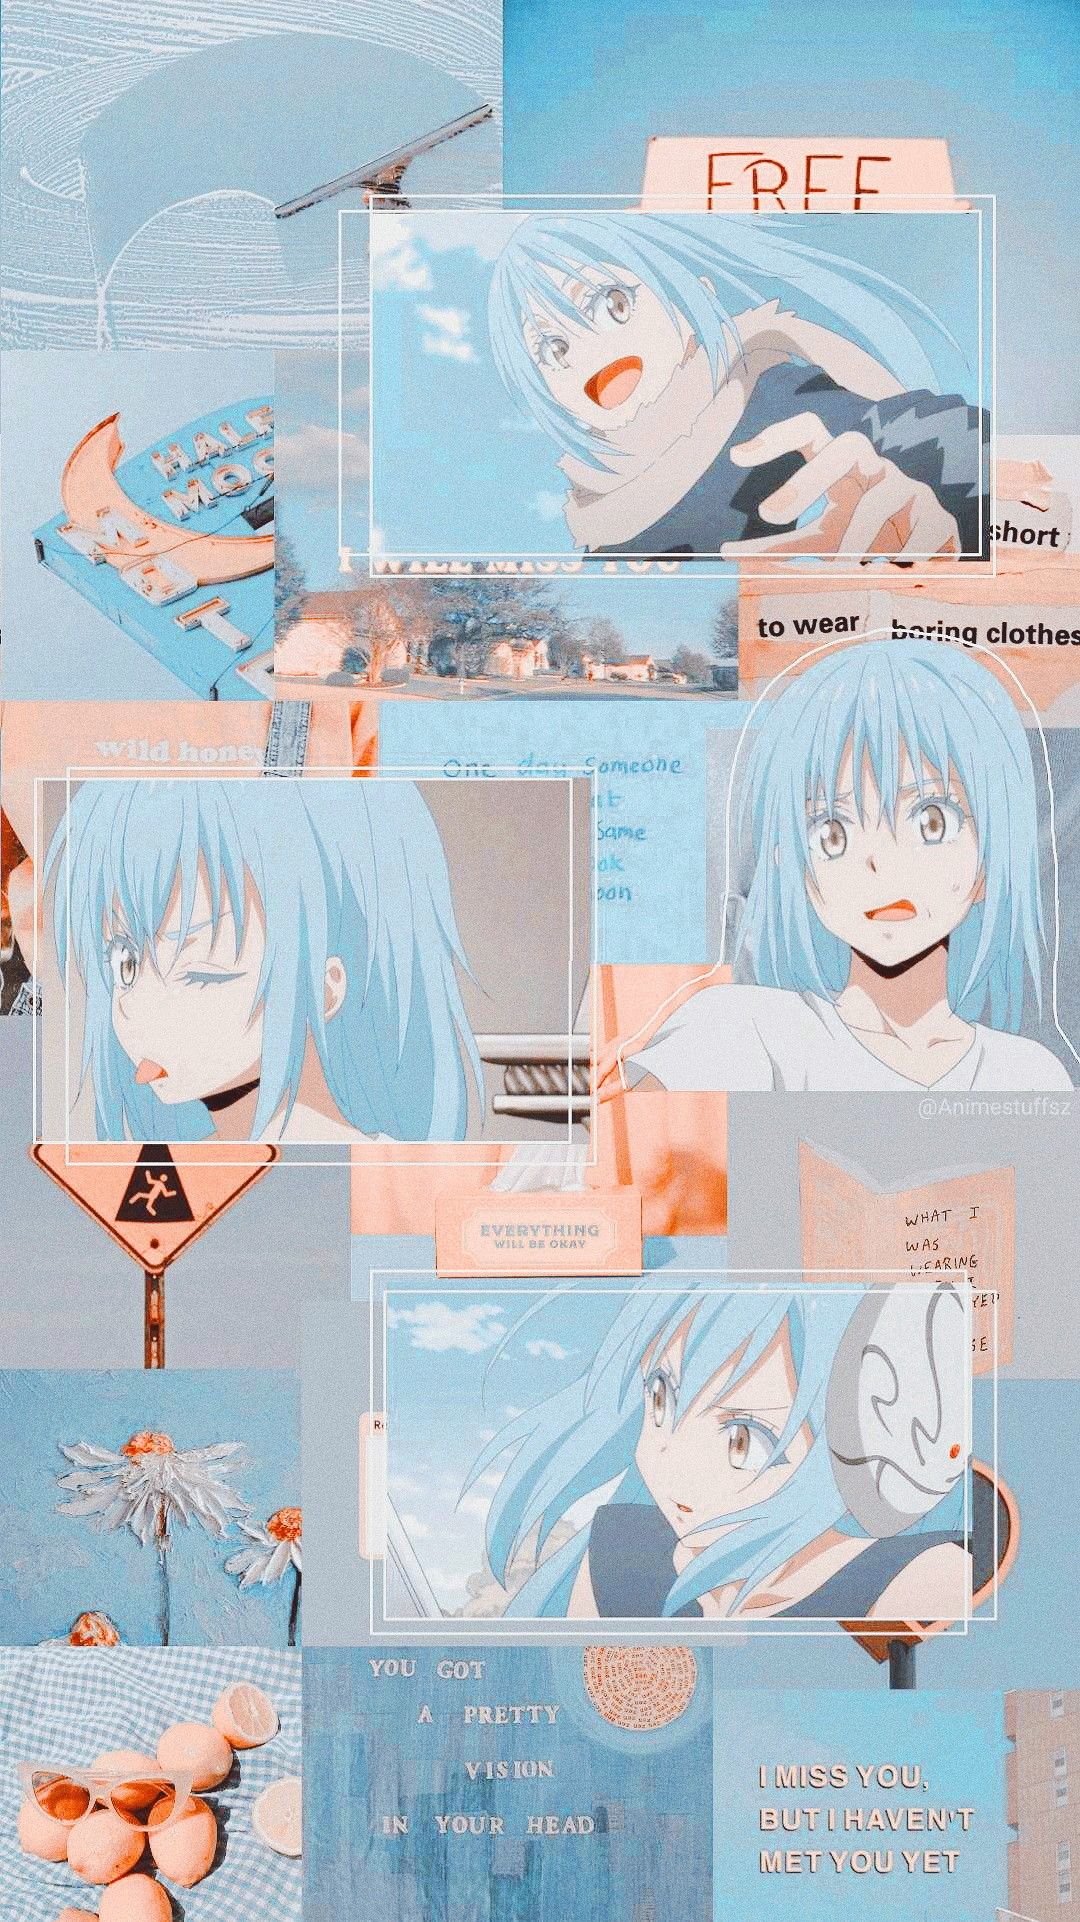 Rimuru Tempest. Slime wallpaper, Anime wallpaper phone, Cute anime wallpaper